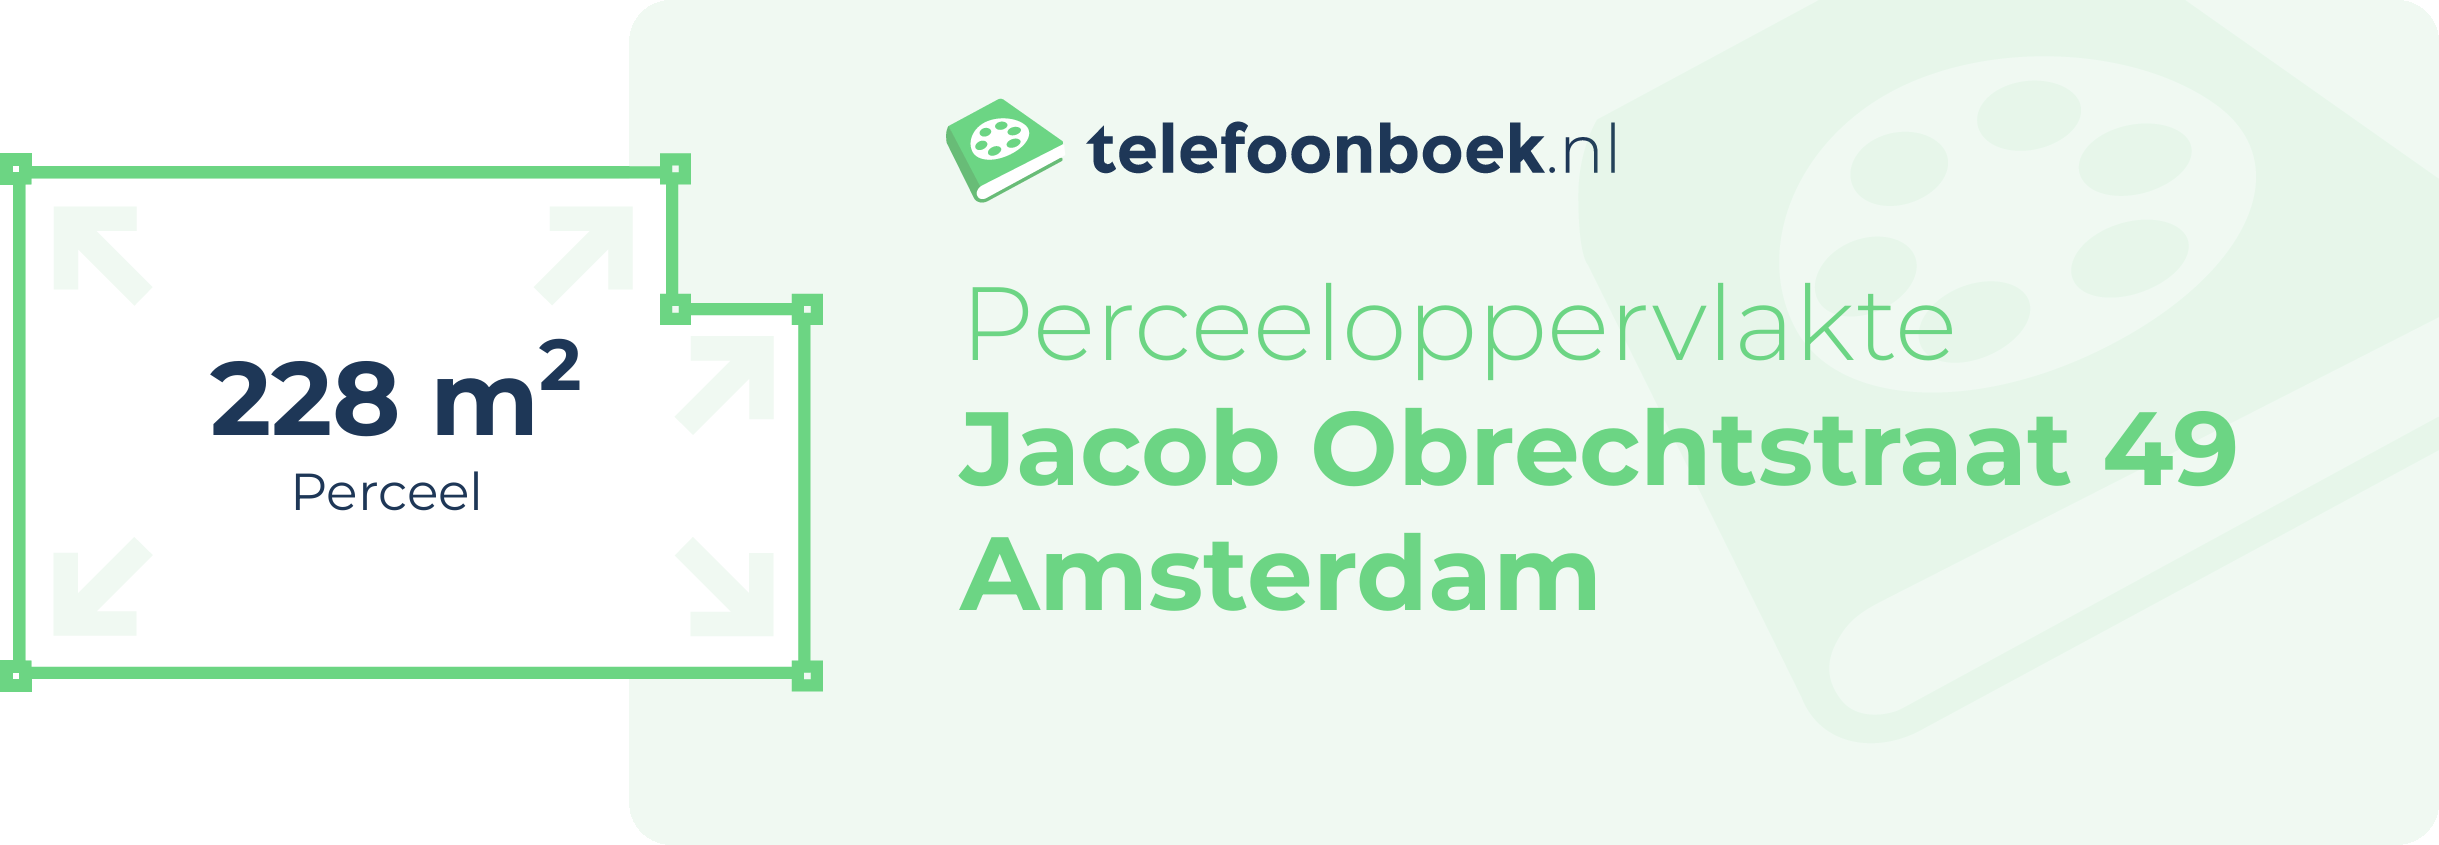 Perceeloppervlakte Jacob Obrechtstraat 49 Amsterdam